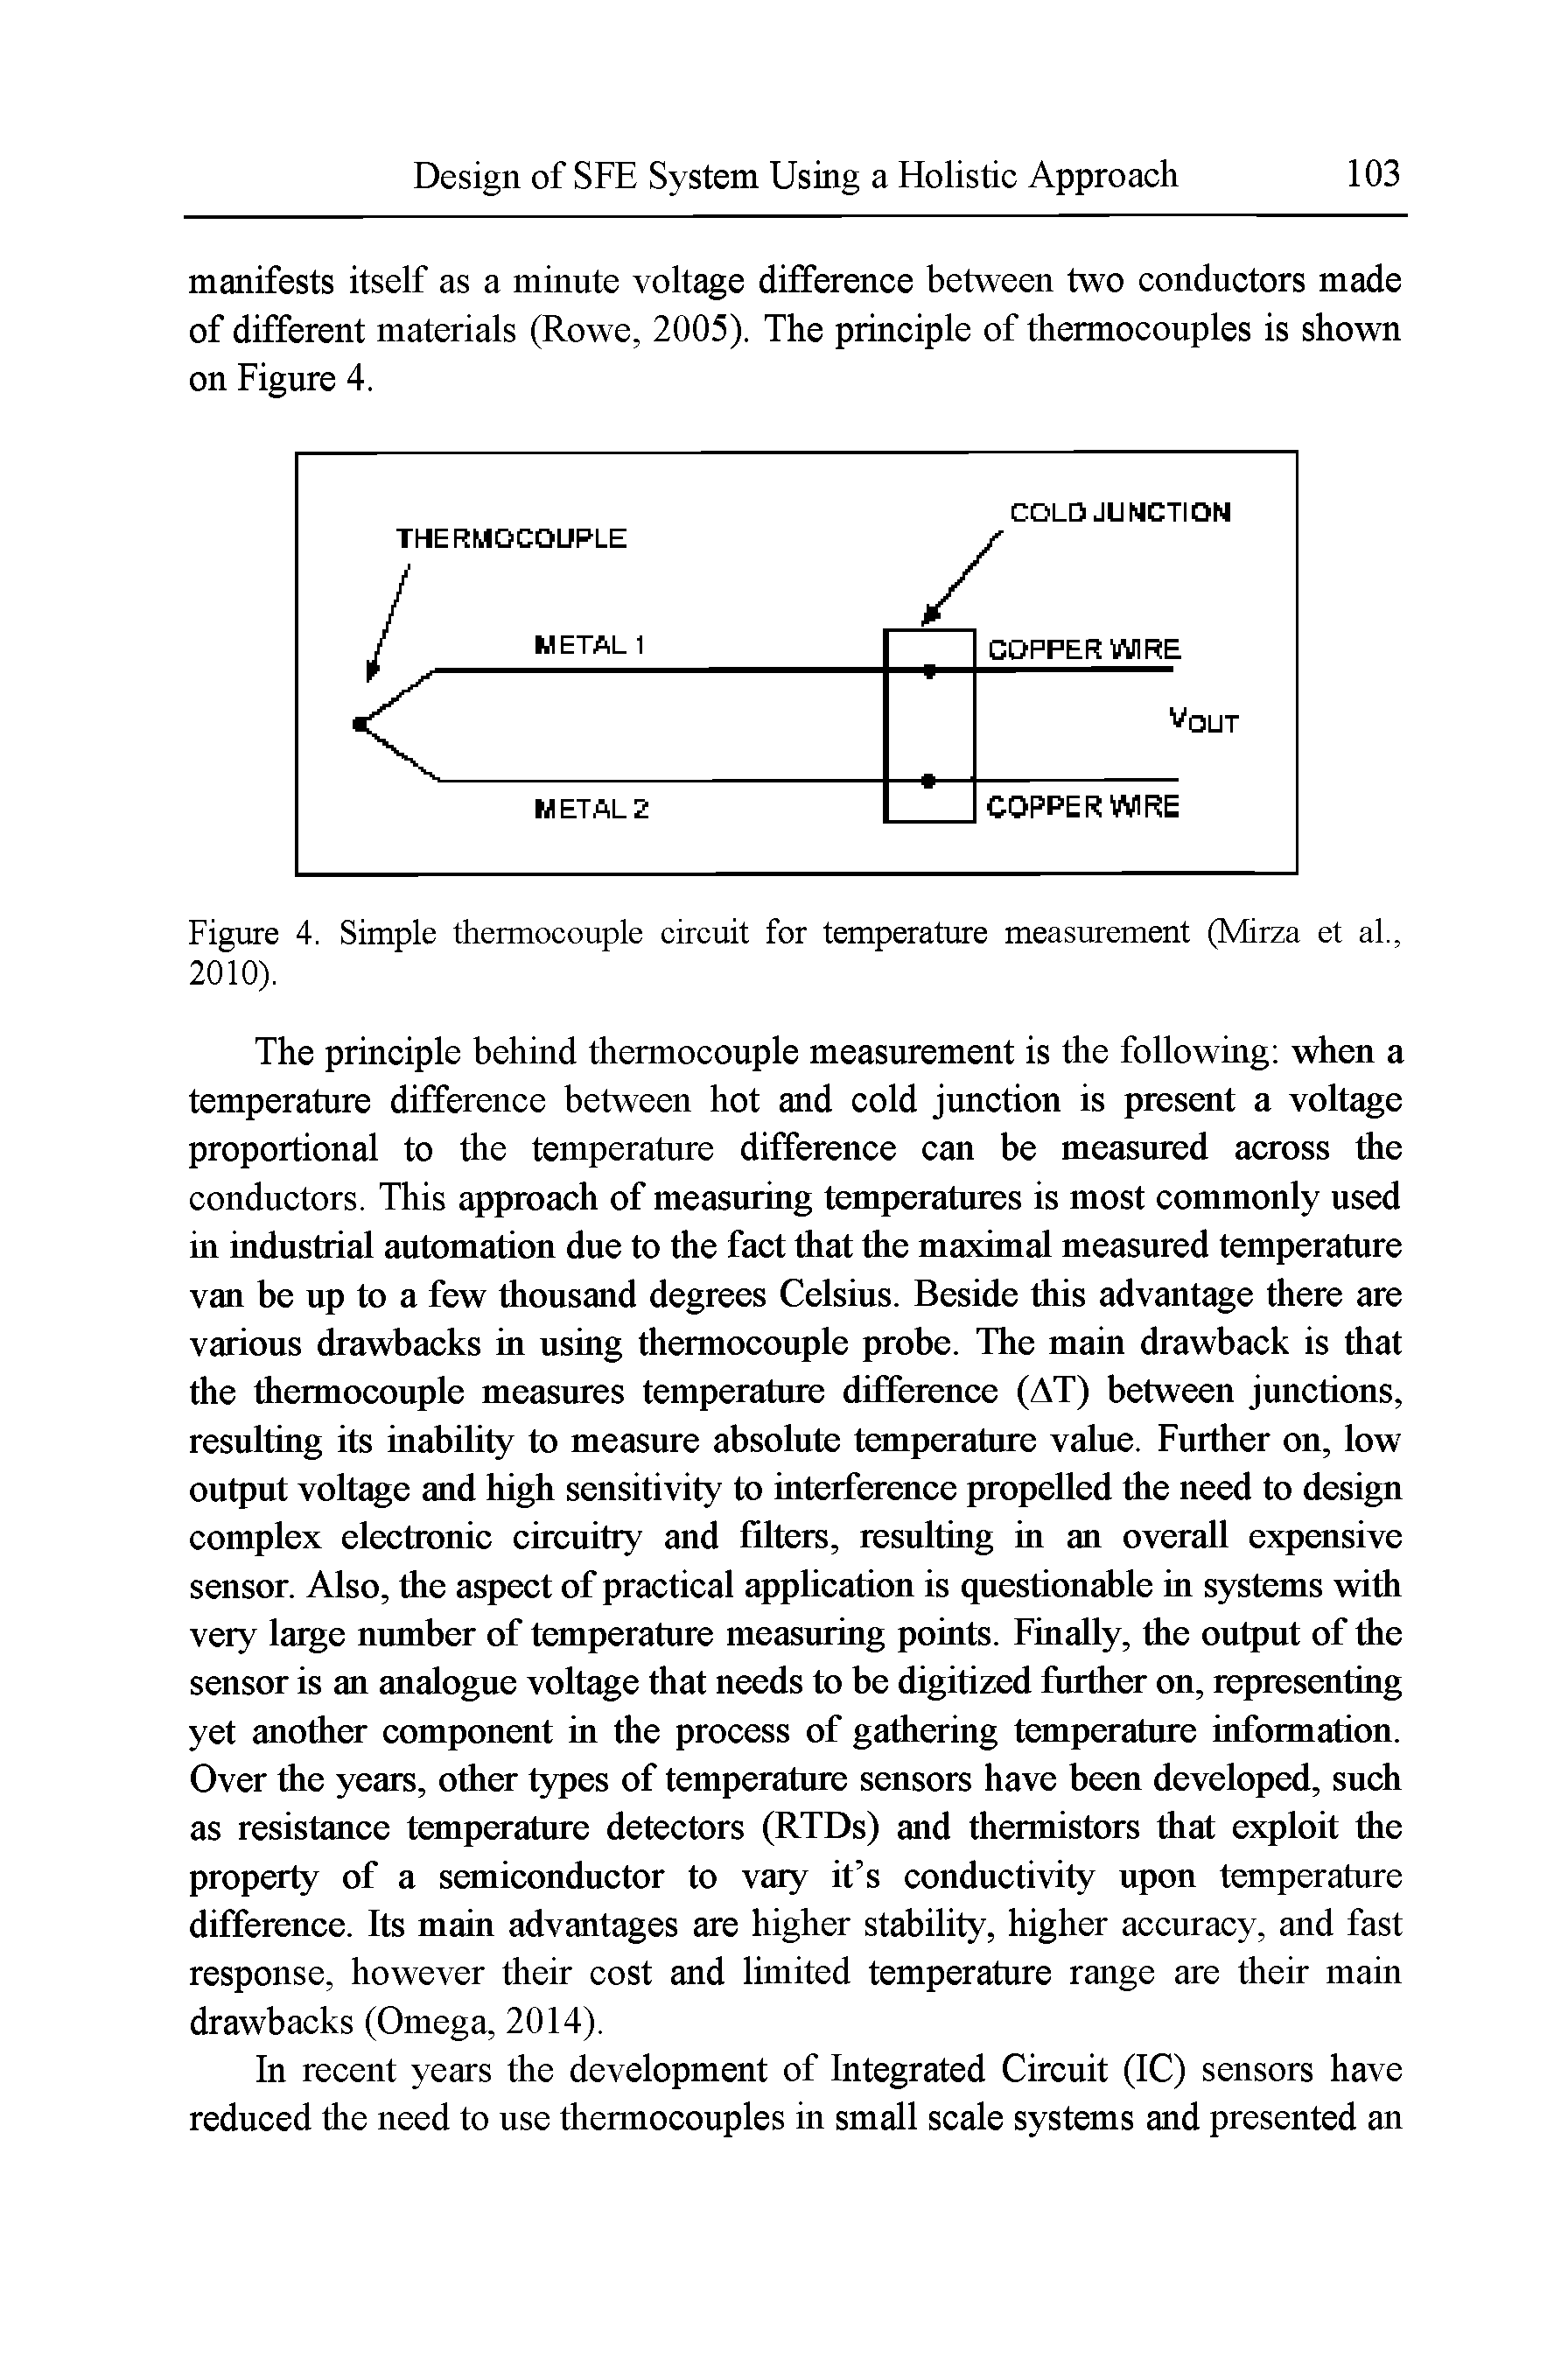 Figure 4. Simple thermocouple circuit for temperature measurement (Miiza et al., 2010).